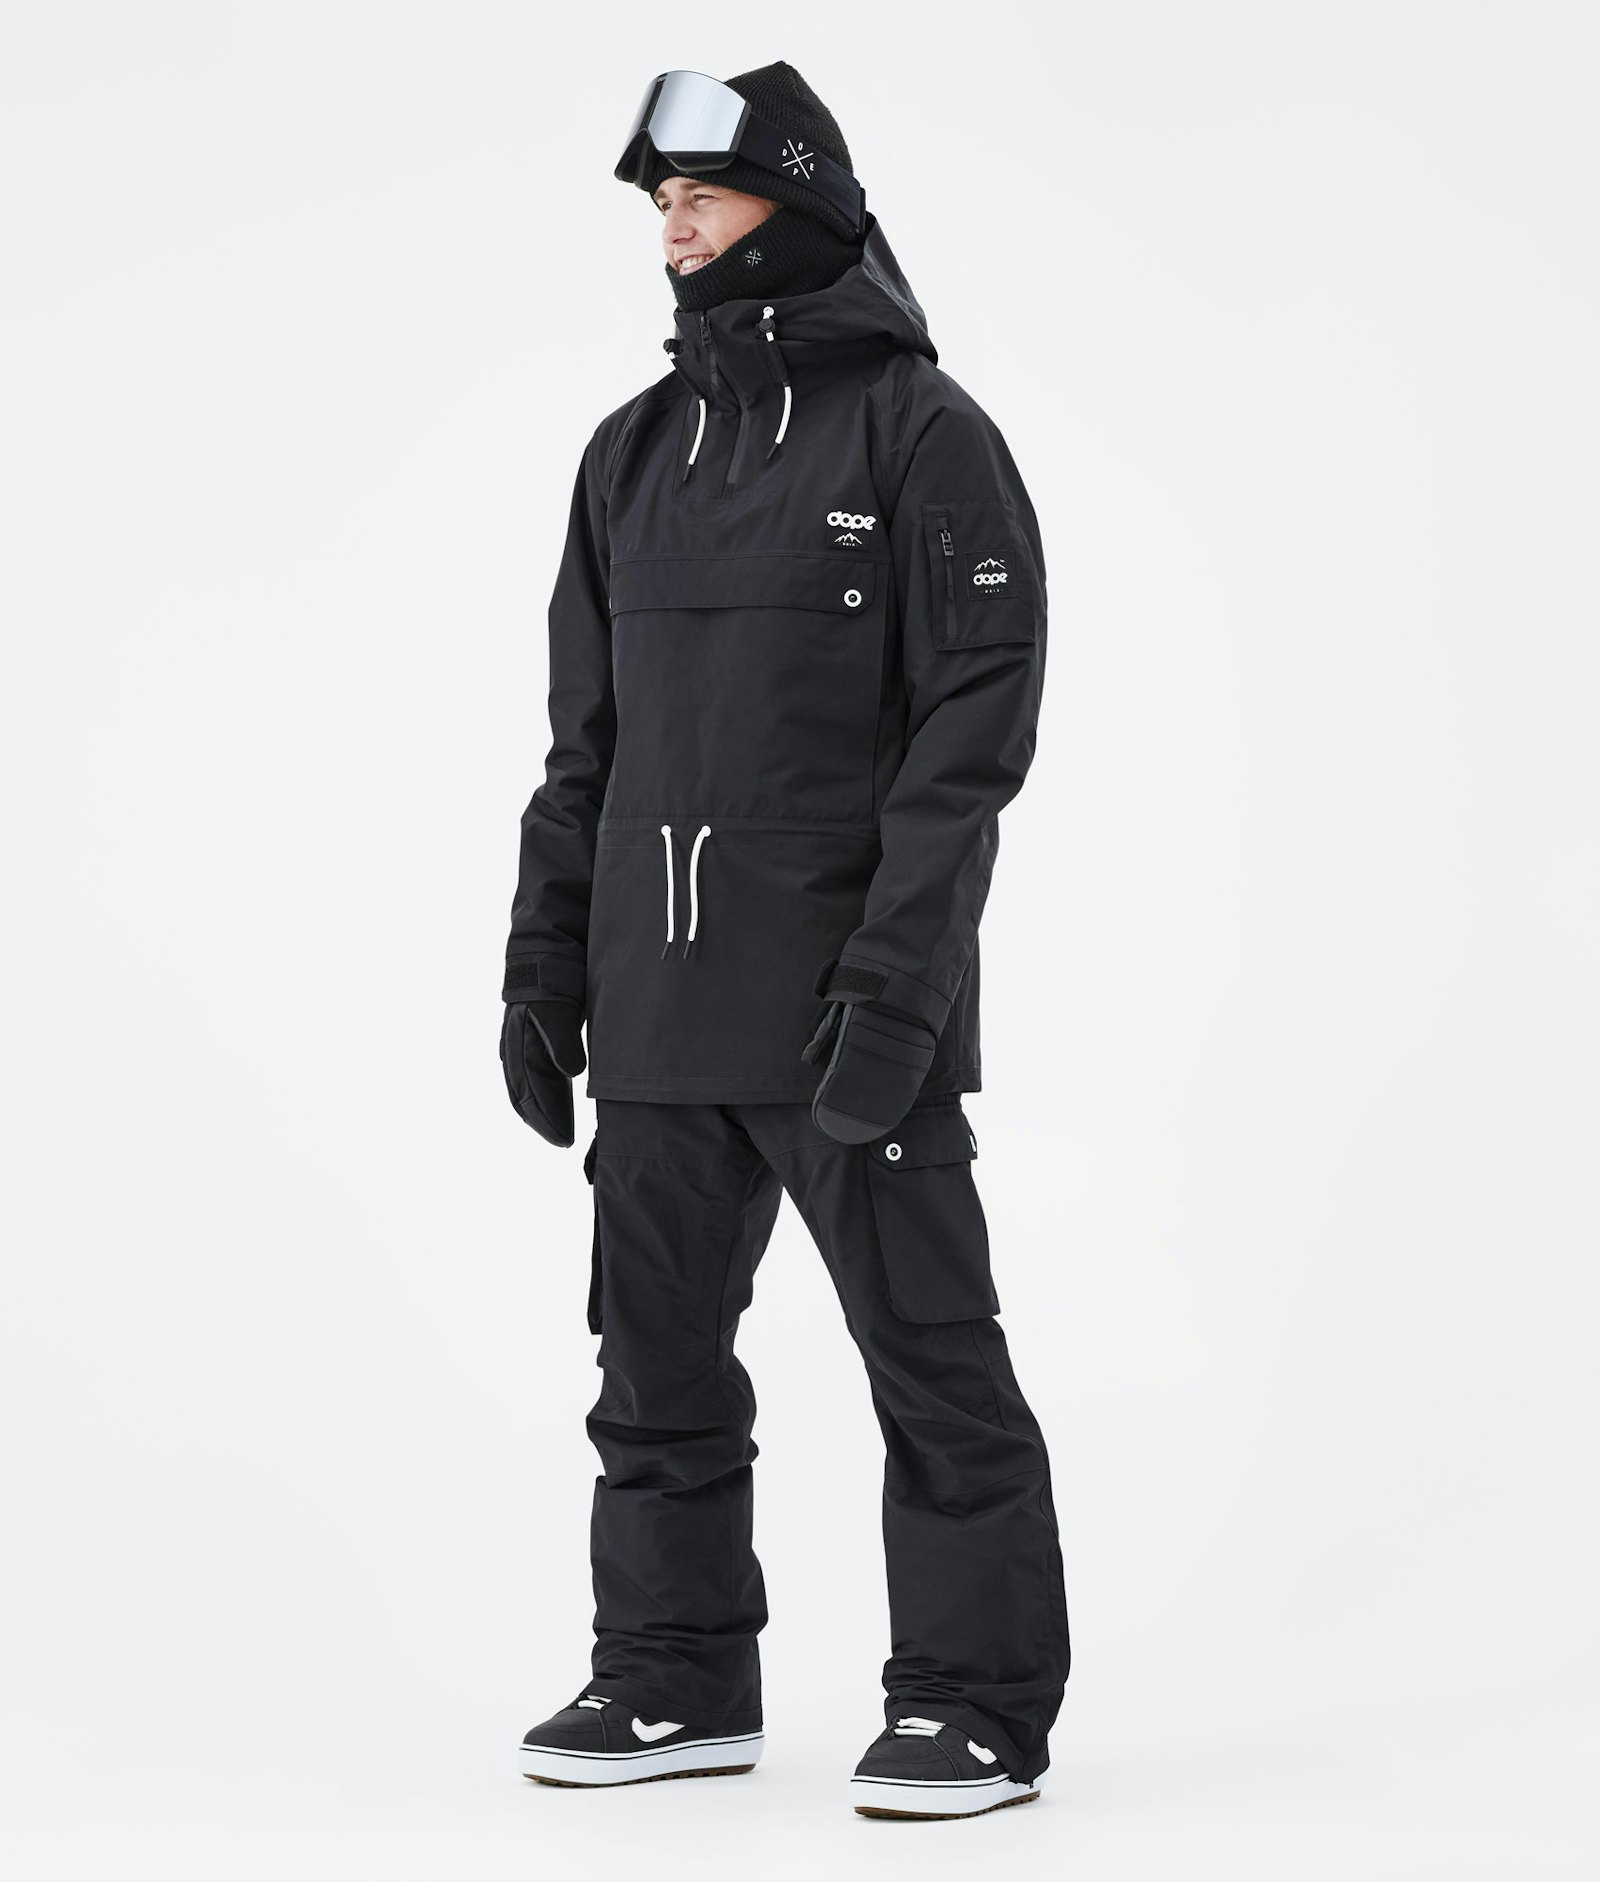 Annok 2021 Veste Snowboard Homme Black